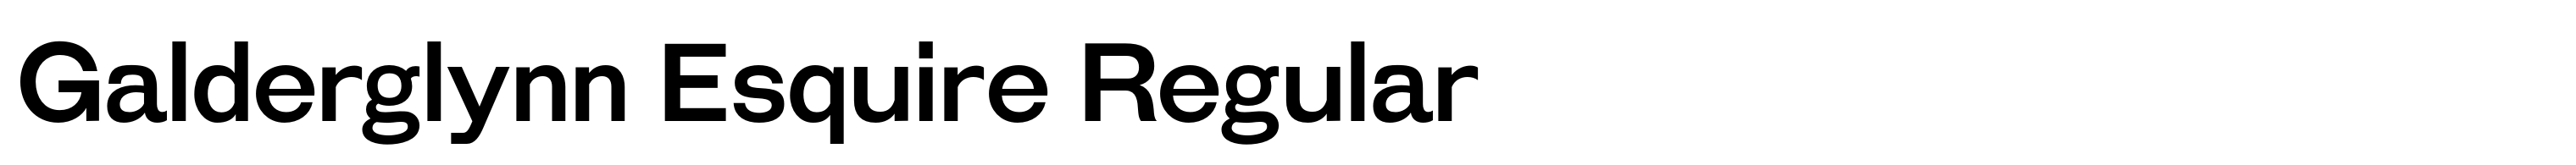 Galderglynn Esquire Regular